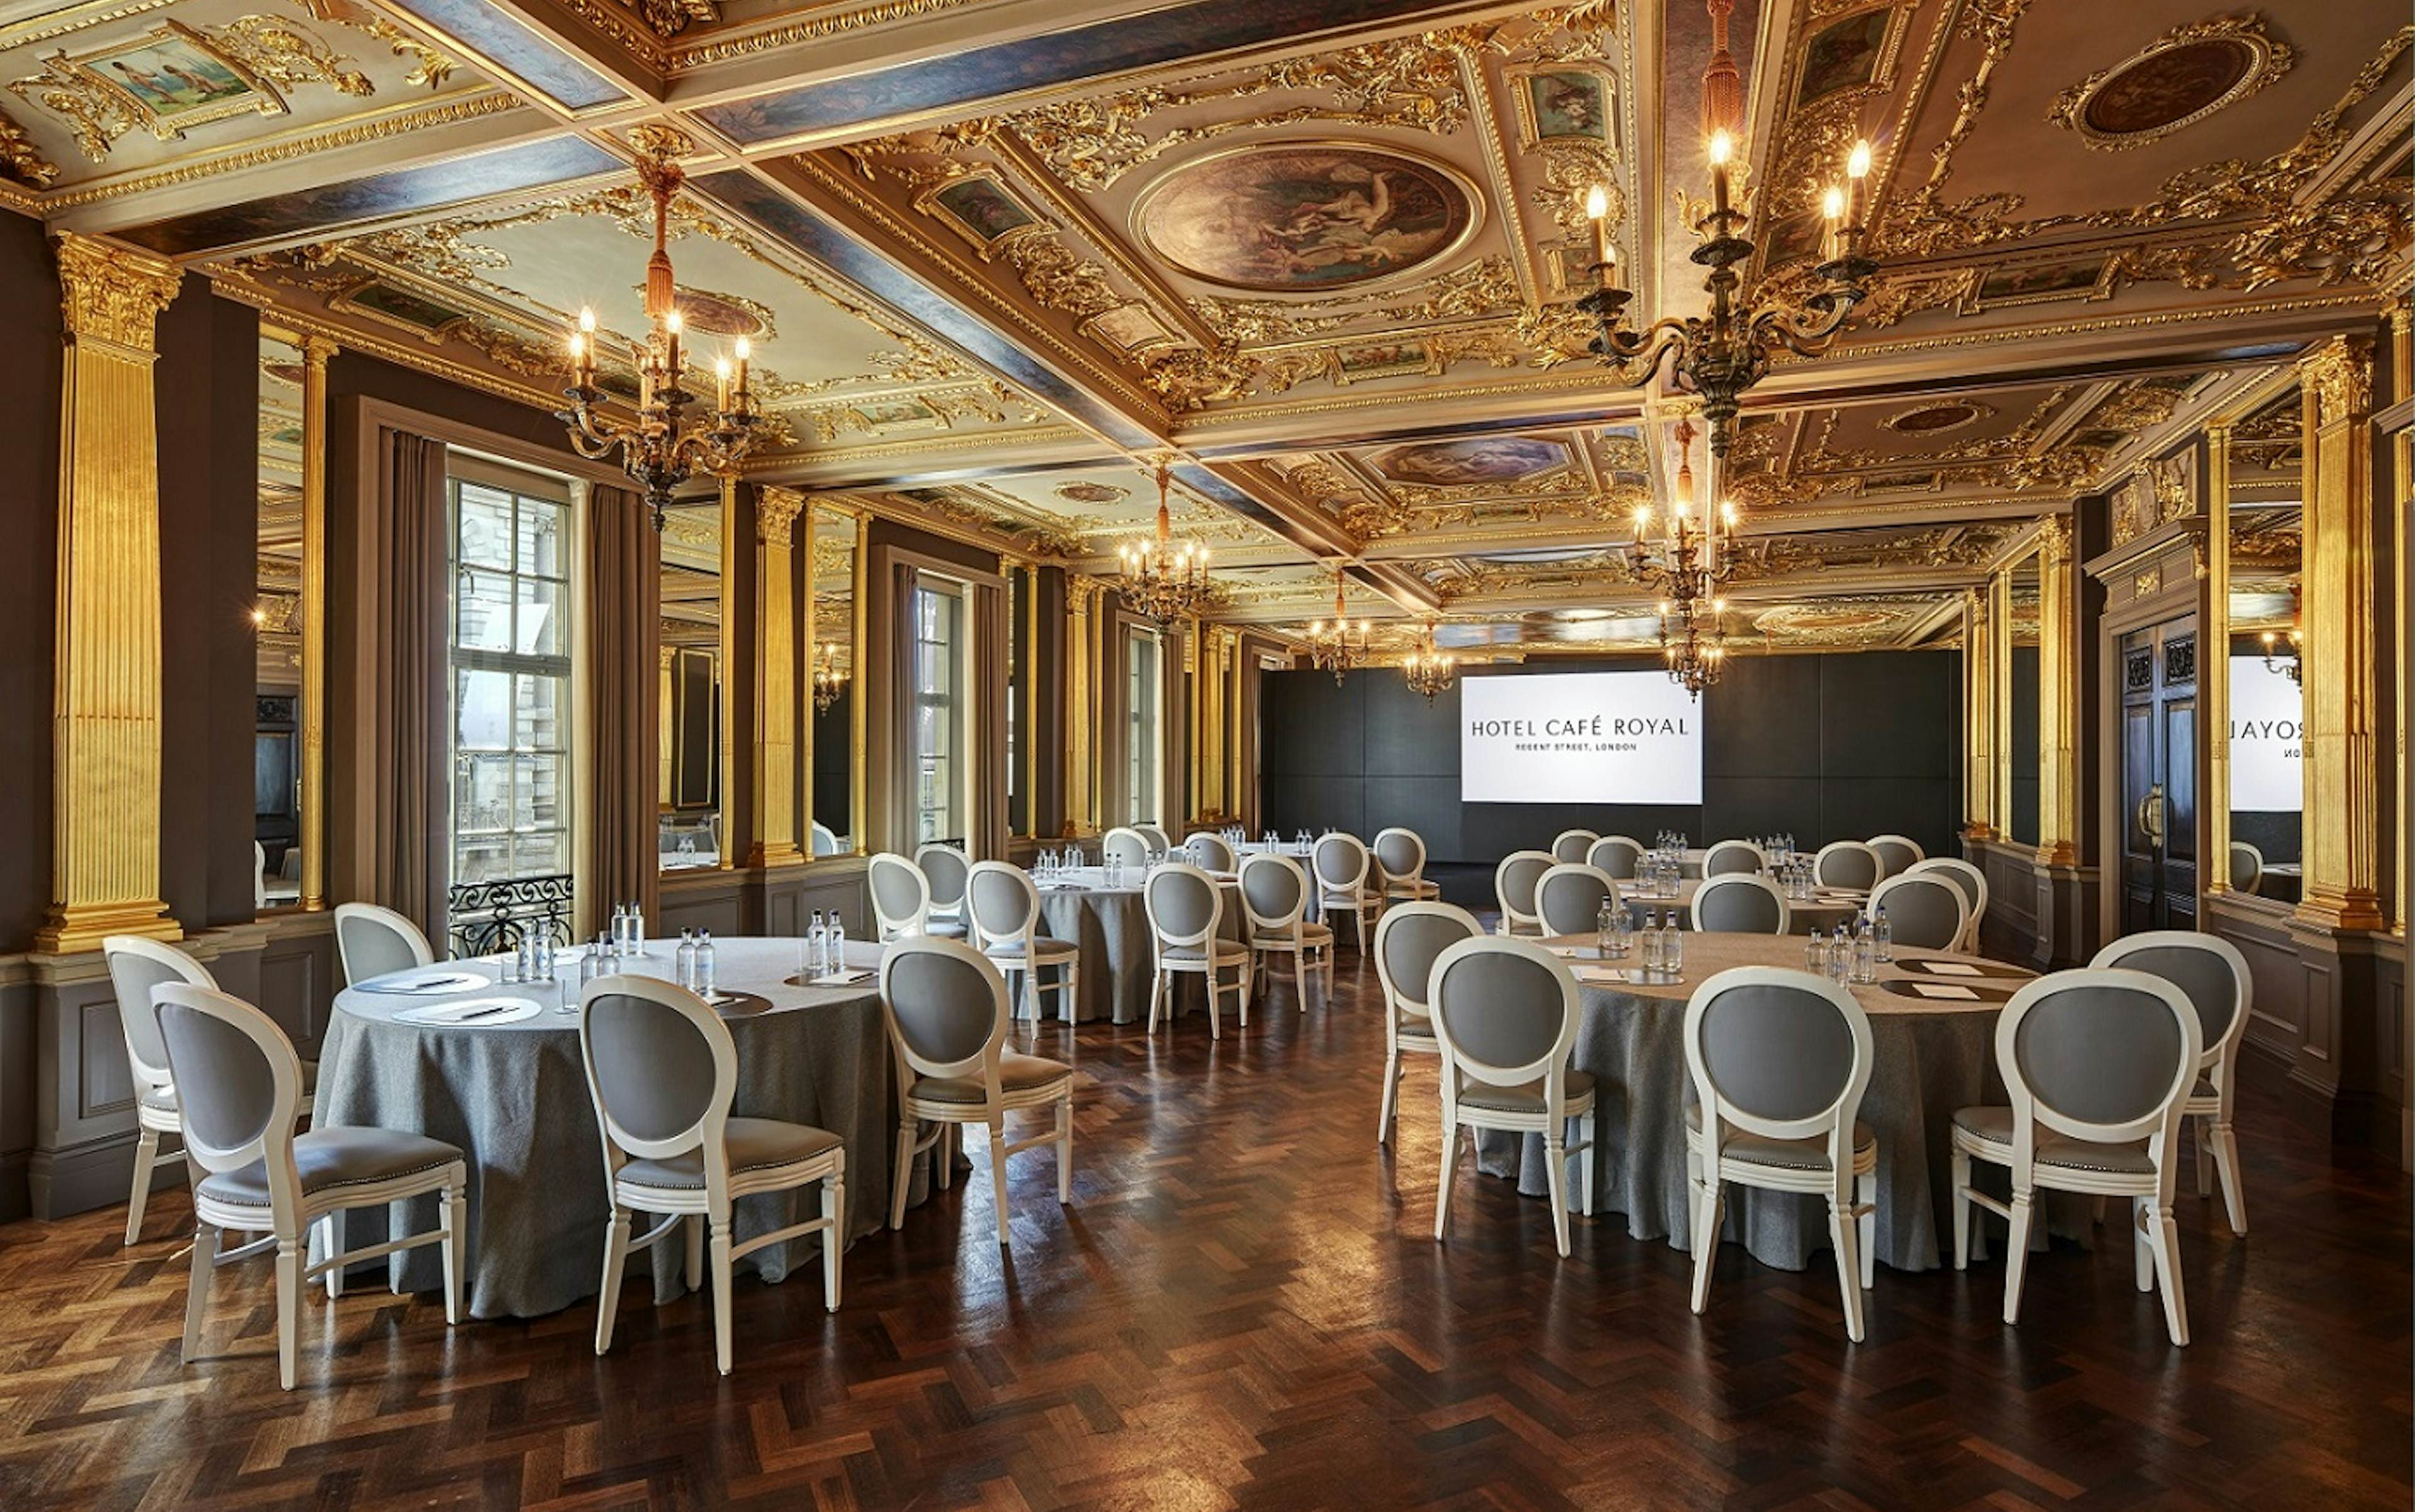 Hotel Cafe Royal - Pompadour Ballroom image 1